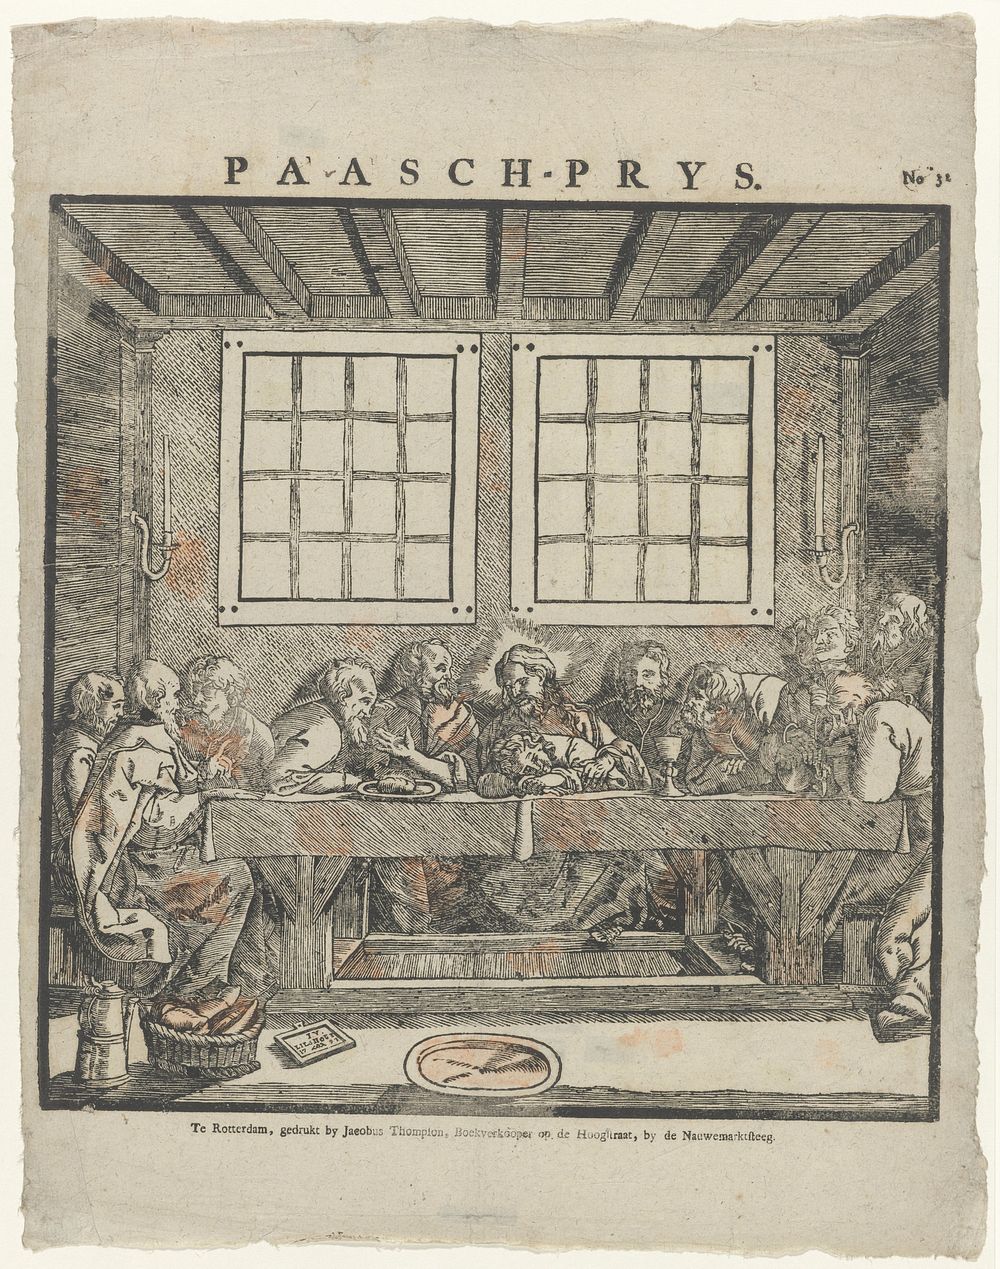 Paaschprys (1791) by Johannes Egbertus van Lieshout and Jacobus Thompson